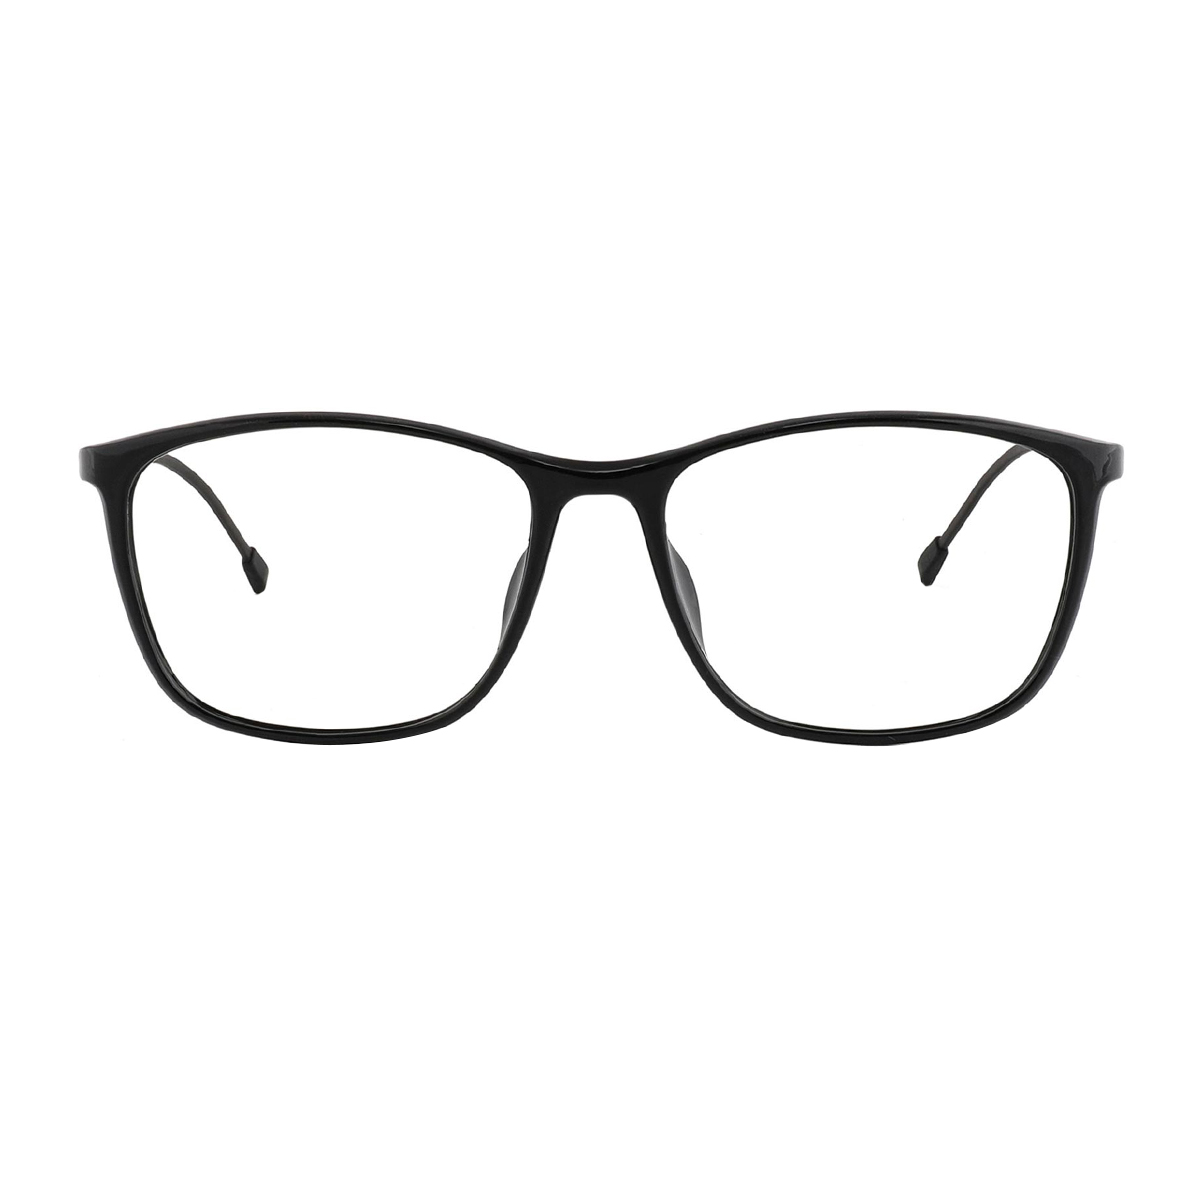 rectangle black reading-glasses